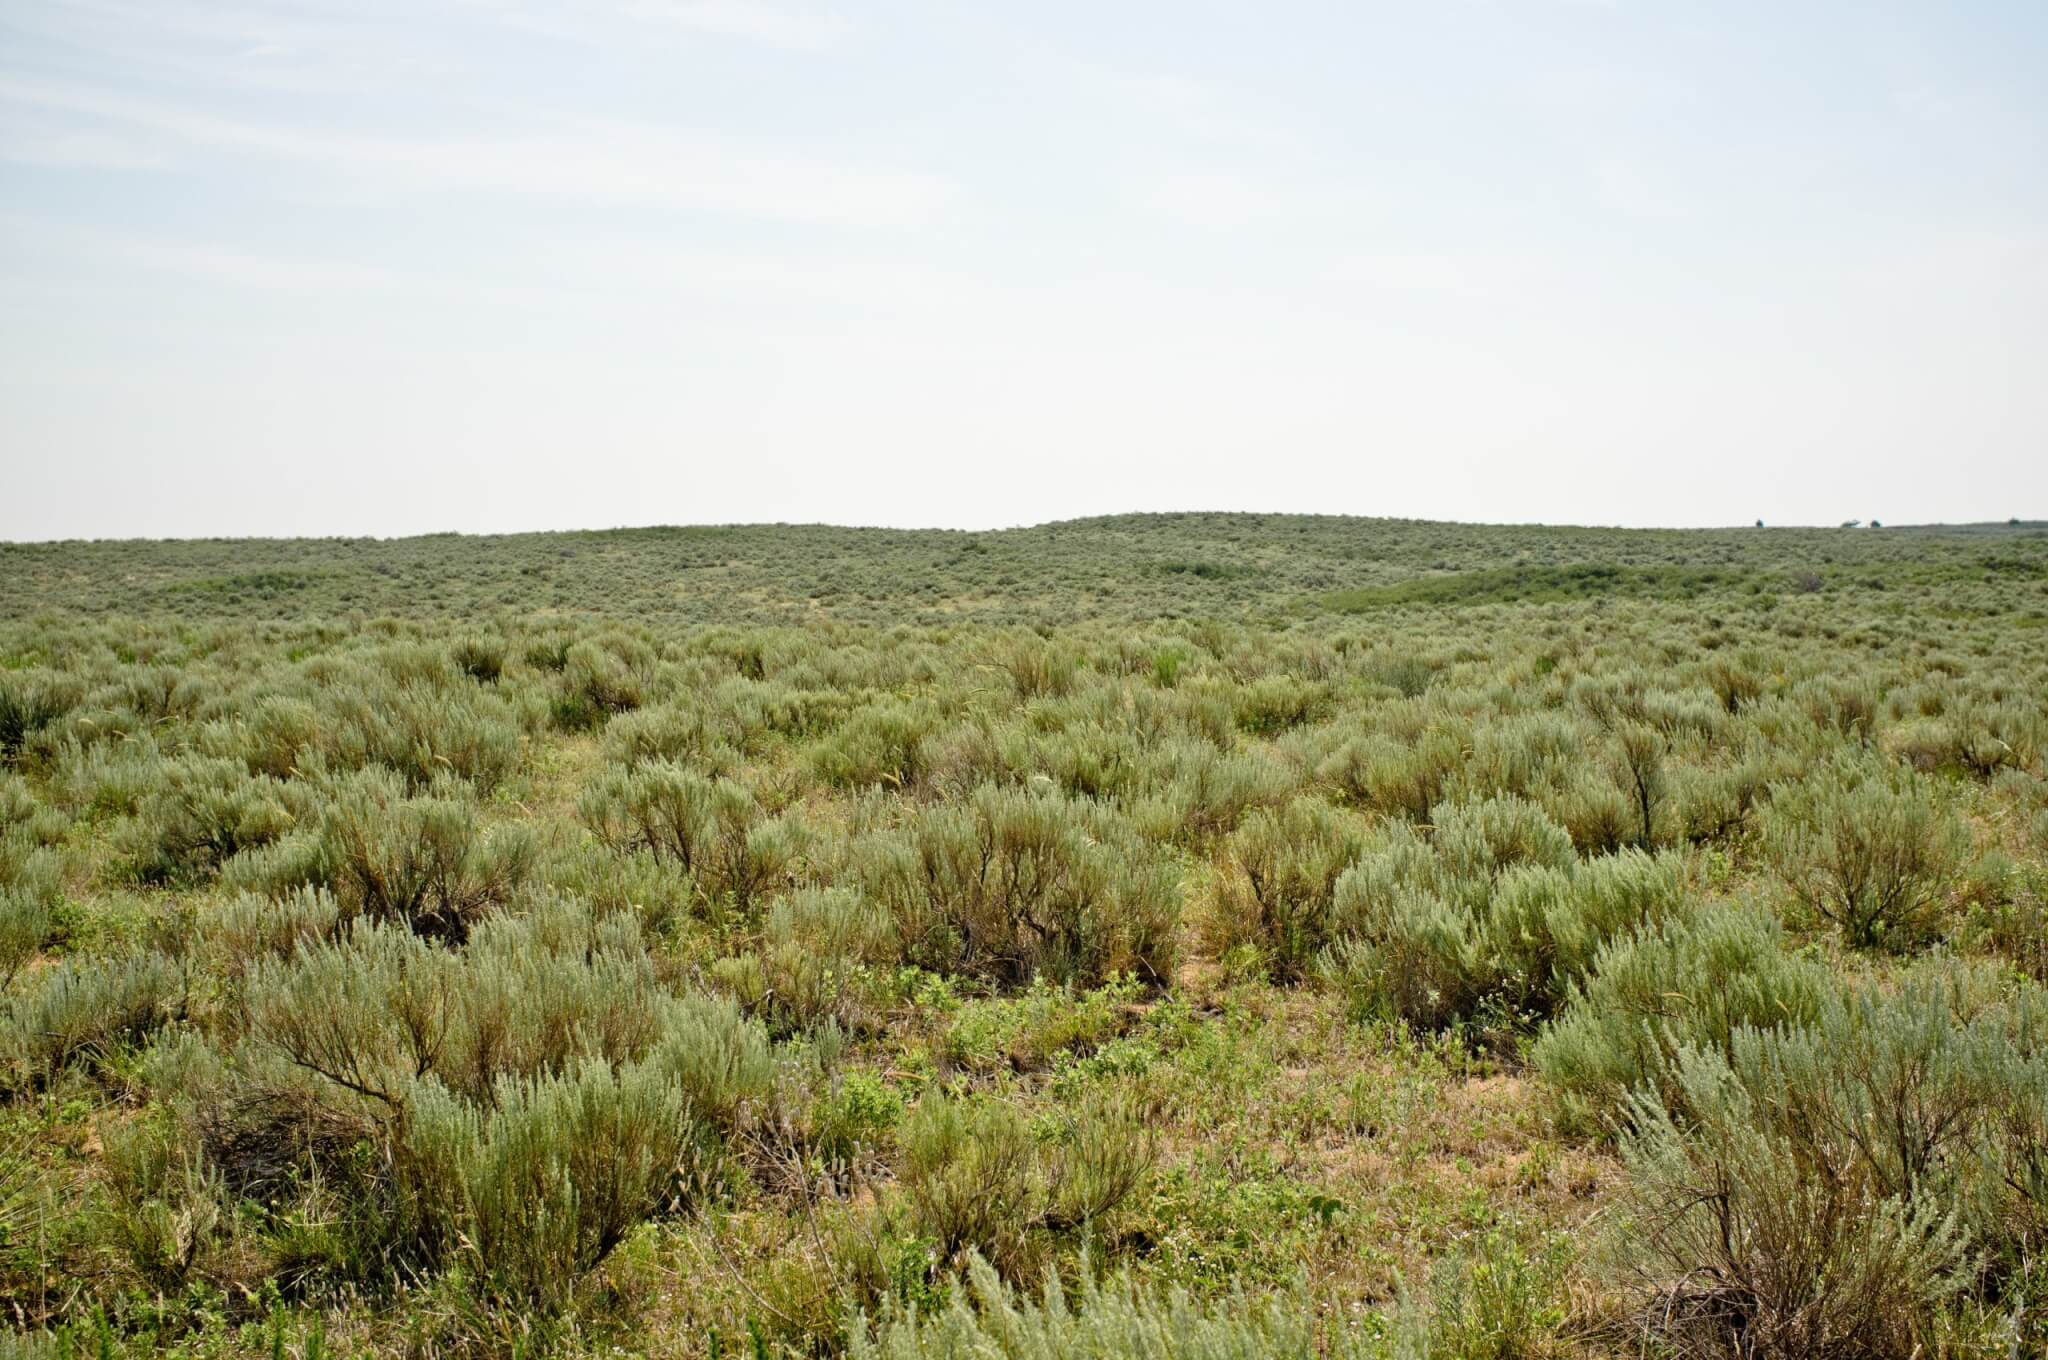 The Sagebrush Landscape